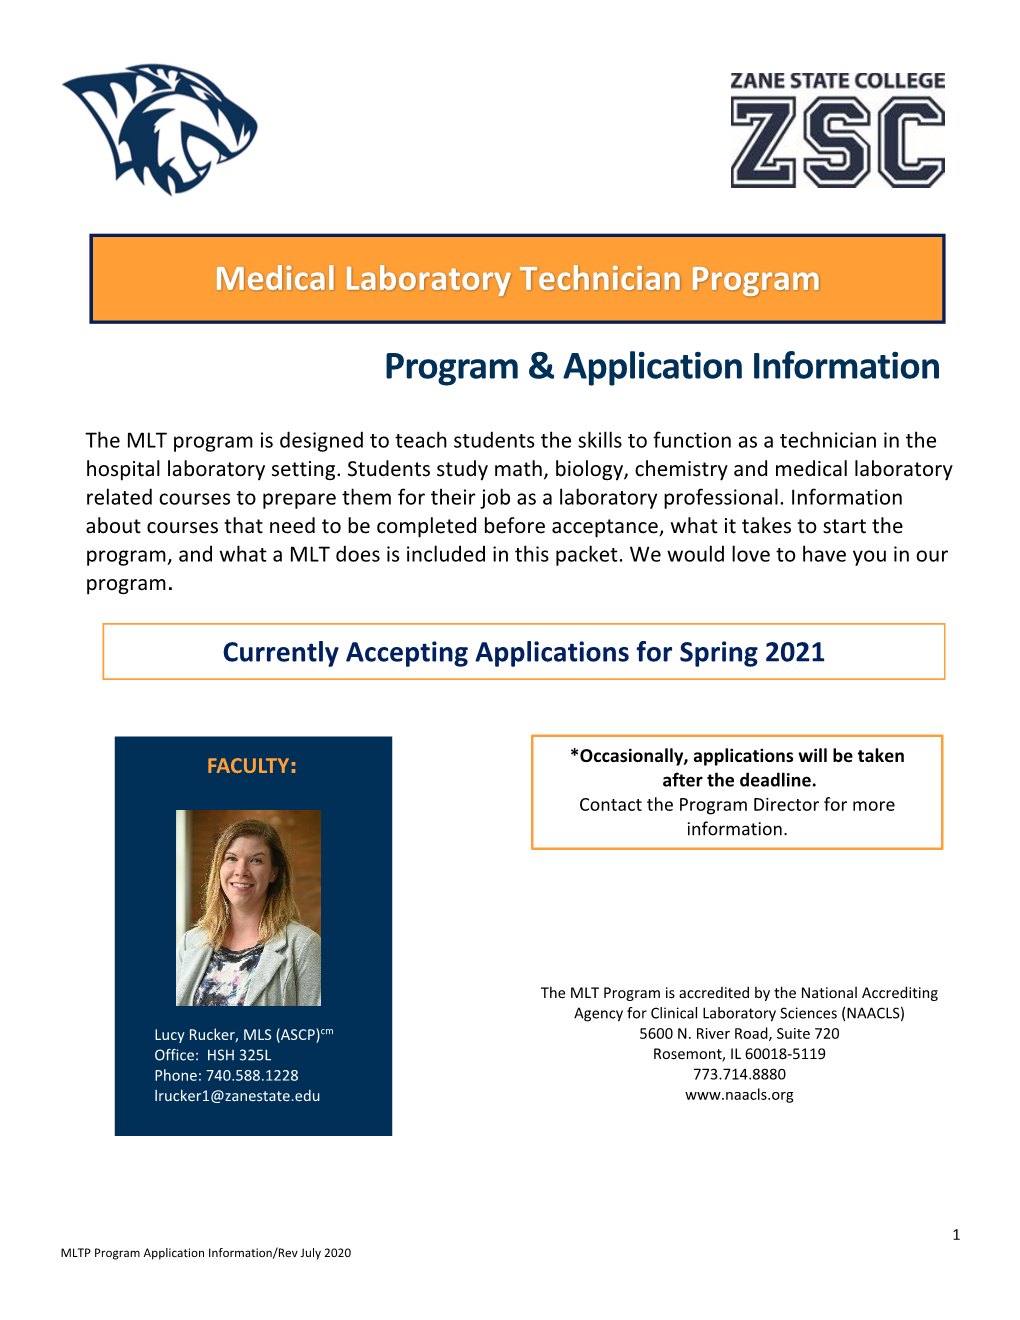 Program & Application Information